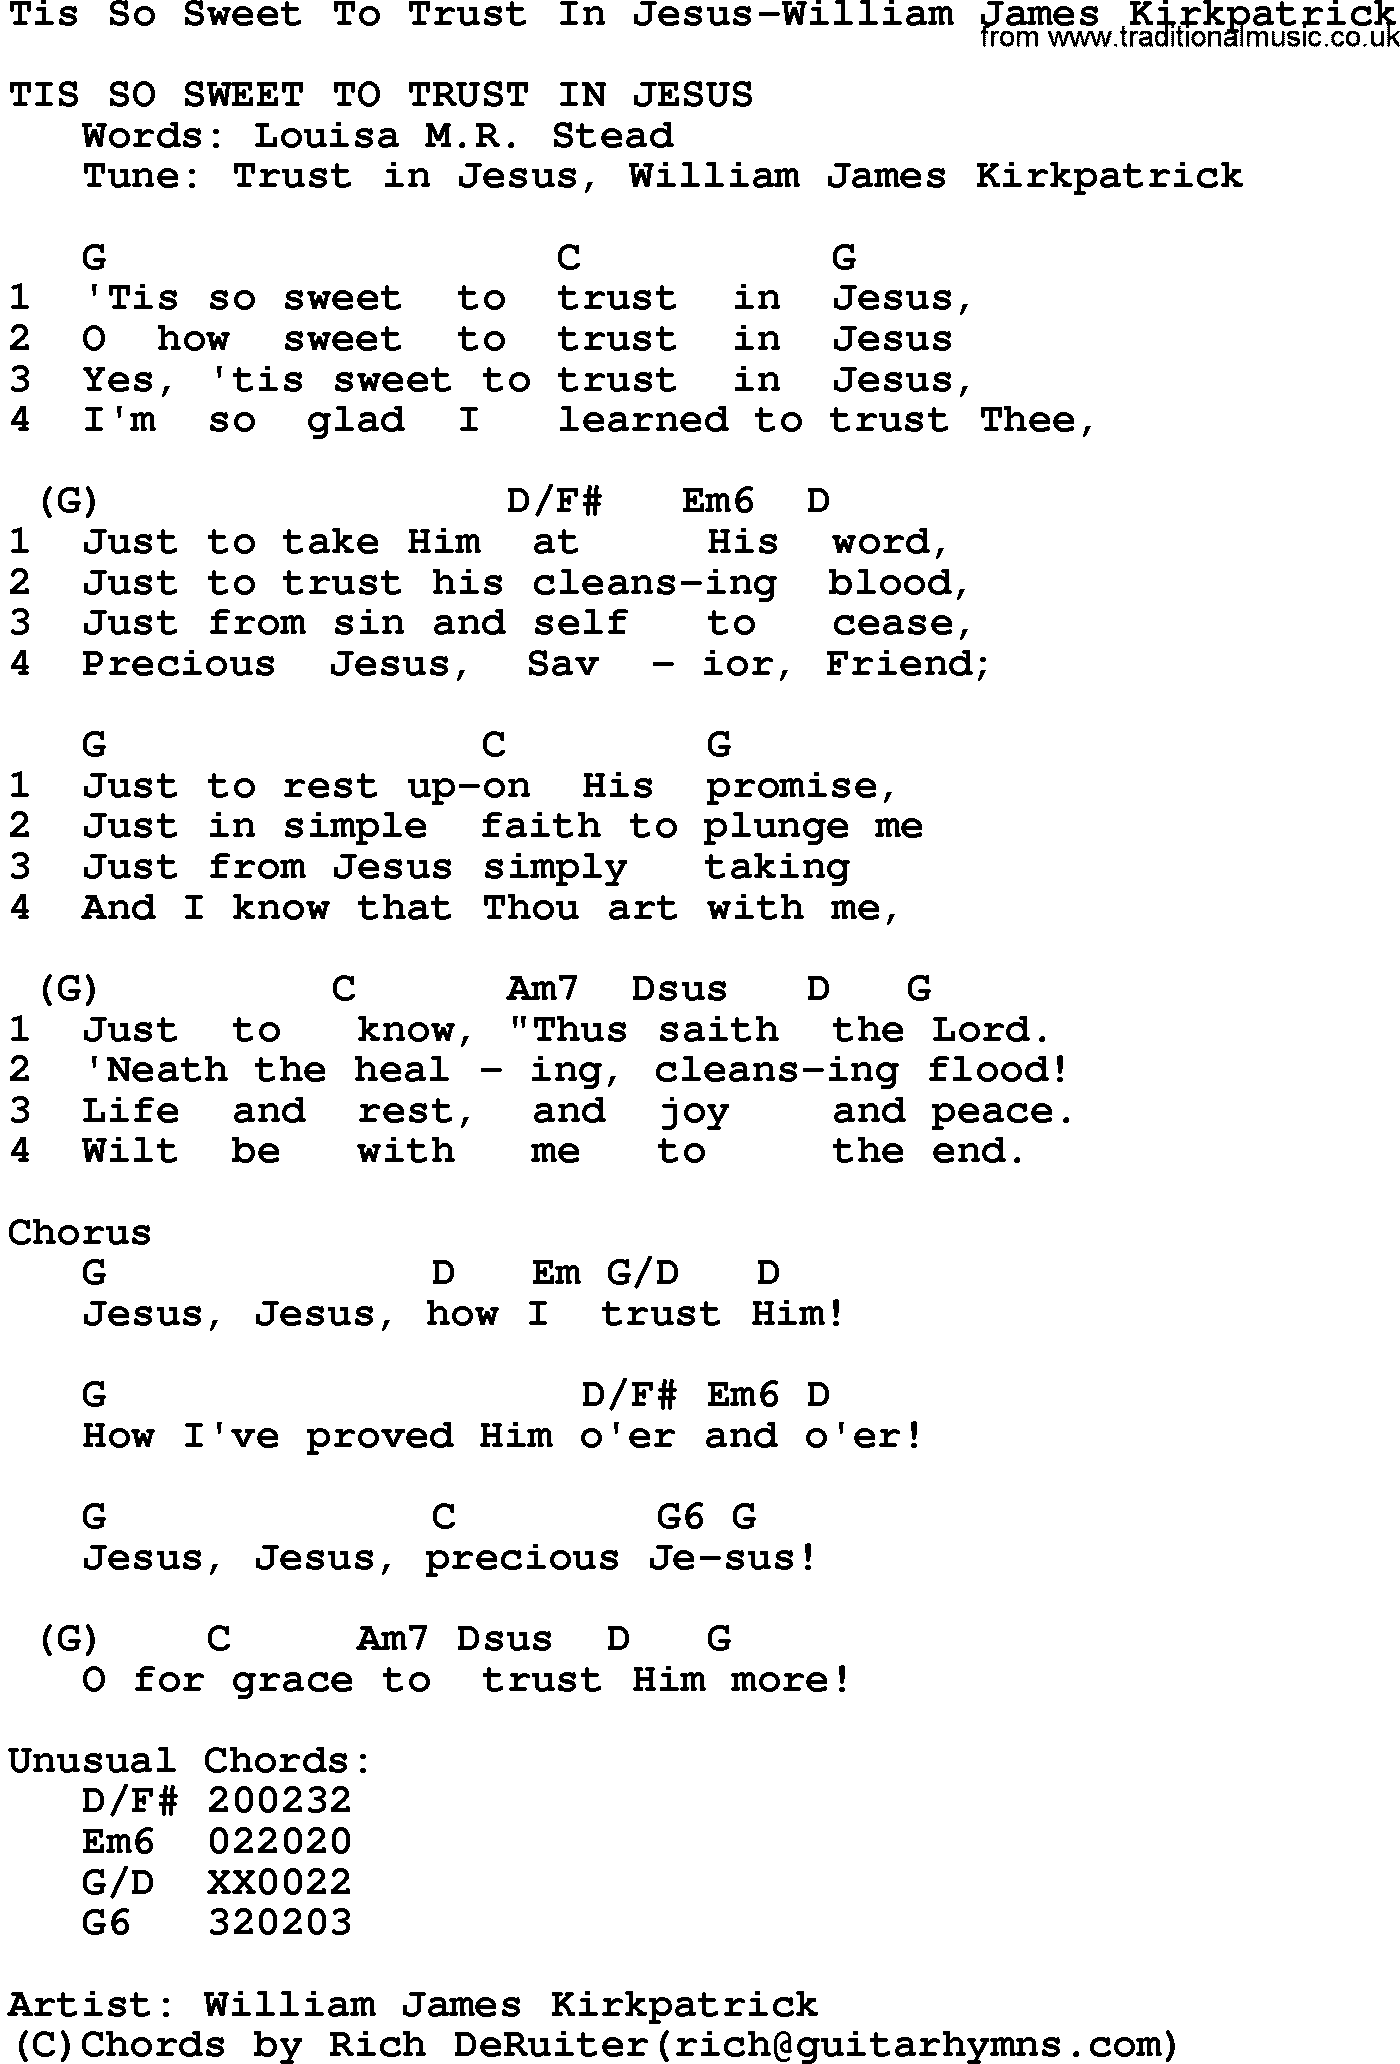 Gospel Song: Tis So Sweet To Trust In Jesus-William James Kirkpatrick, lyrics and chords.